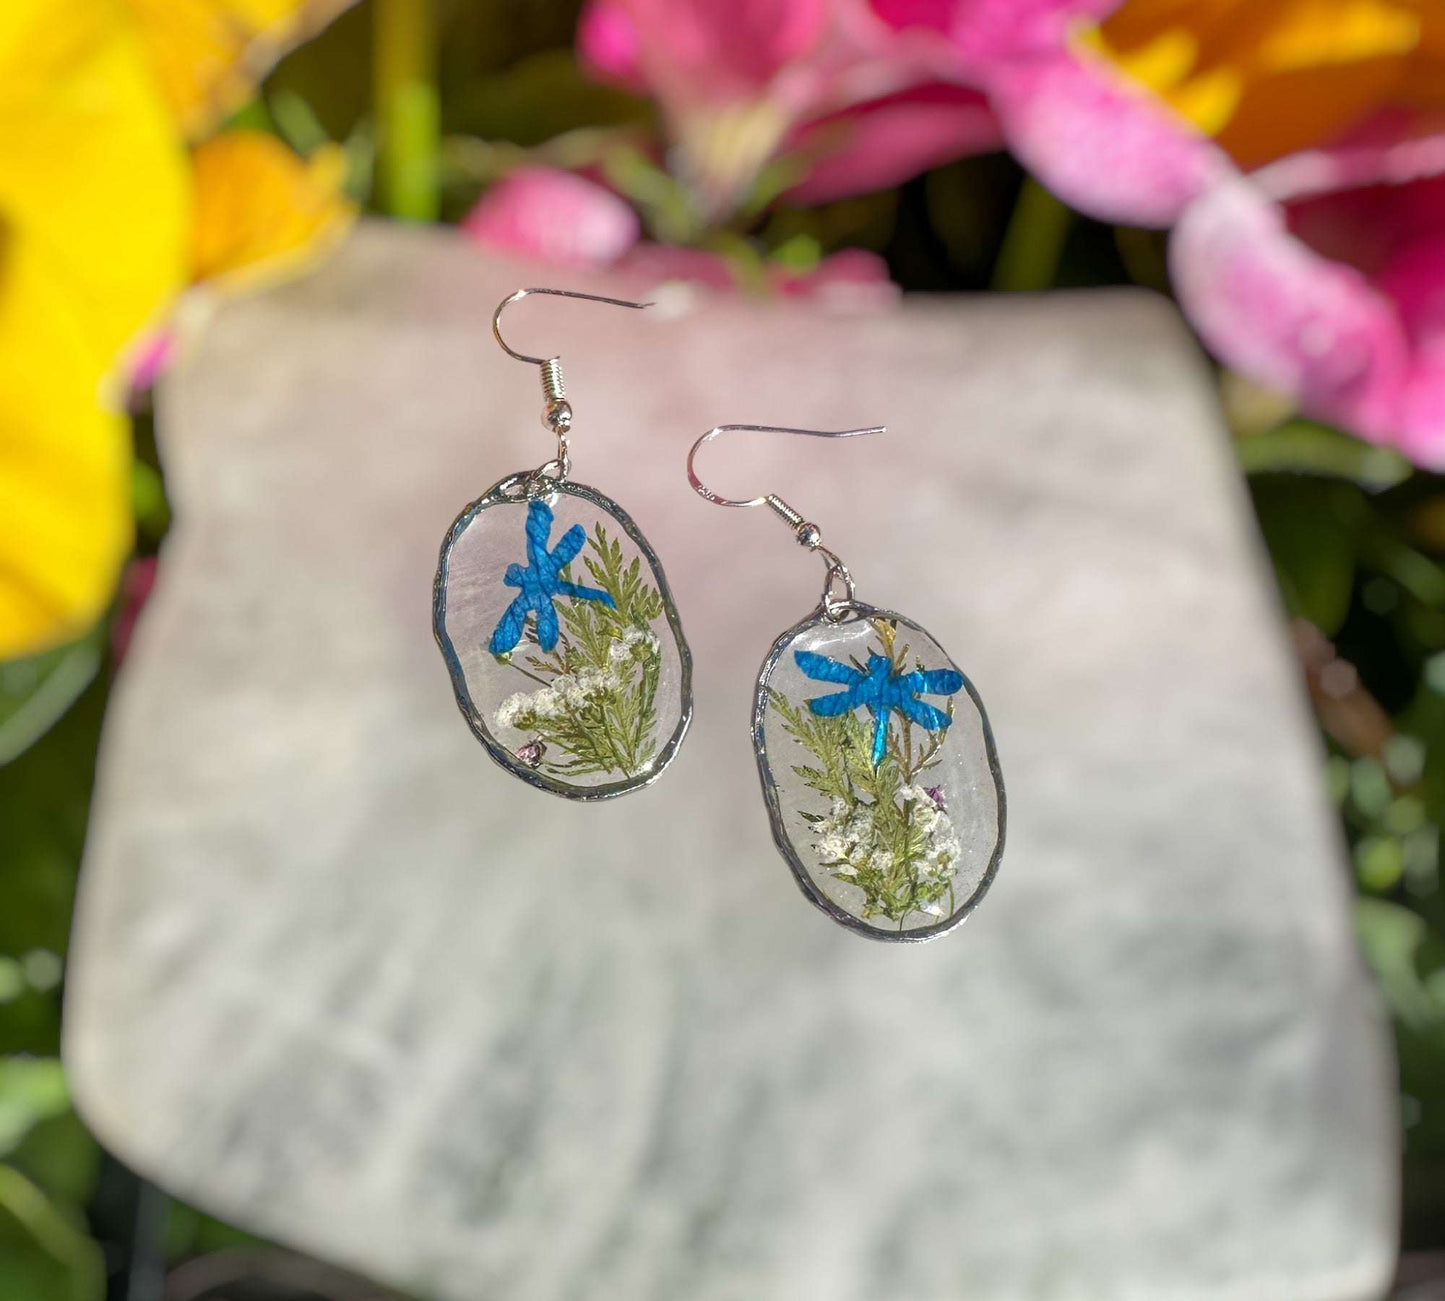 Enchanted Dragonfly Garden Earrings - Handmade Pressed Flower Earrings